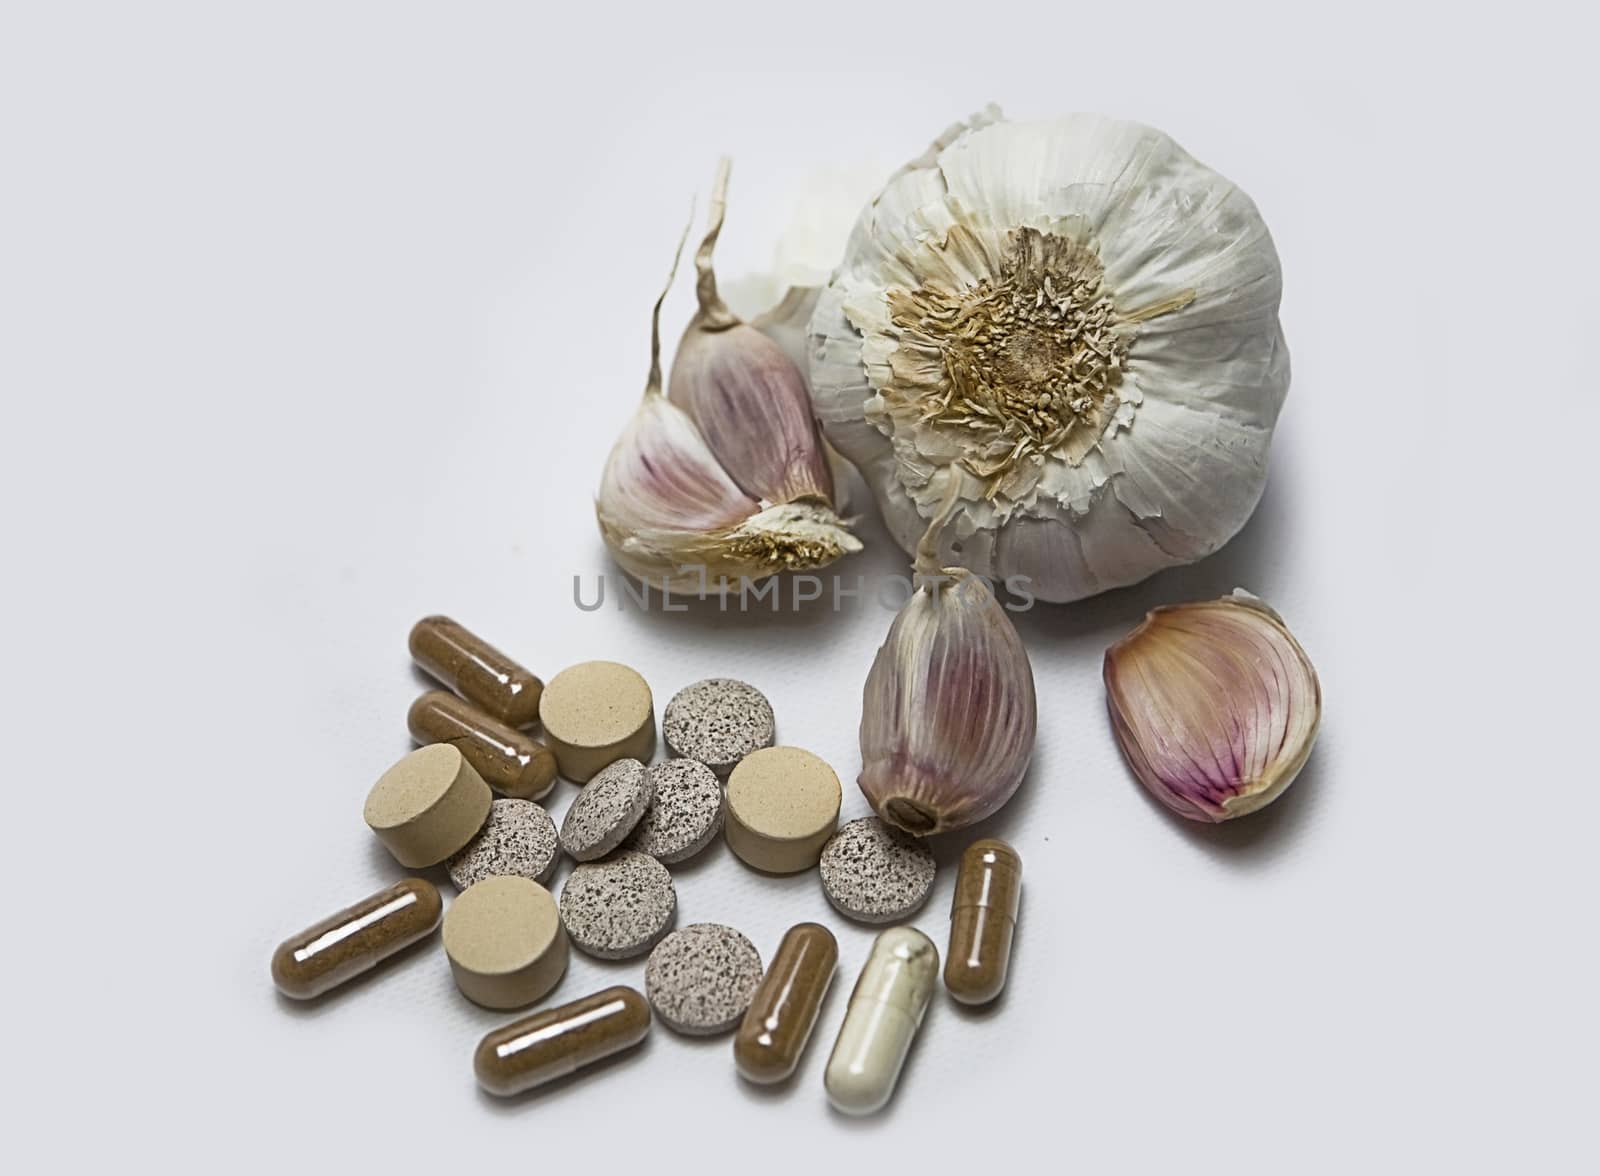 Garlic and herbal supplement pills, alternative medicine concept